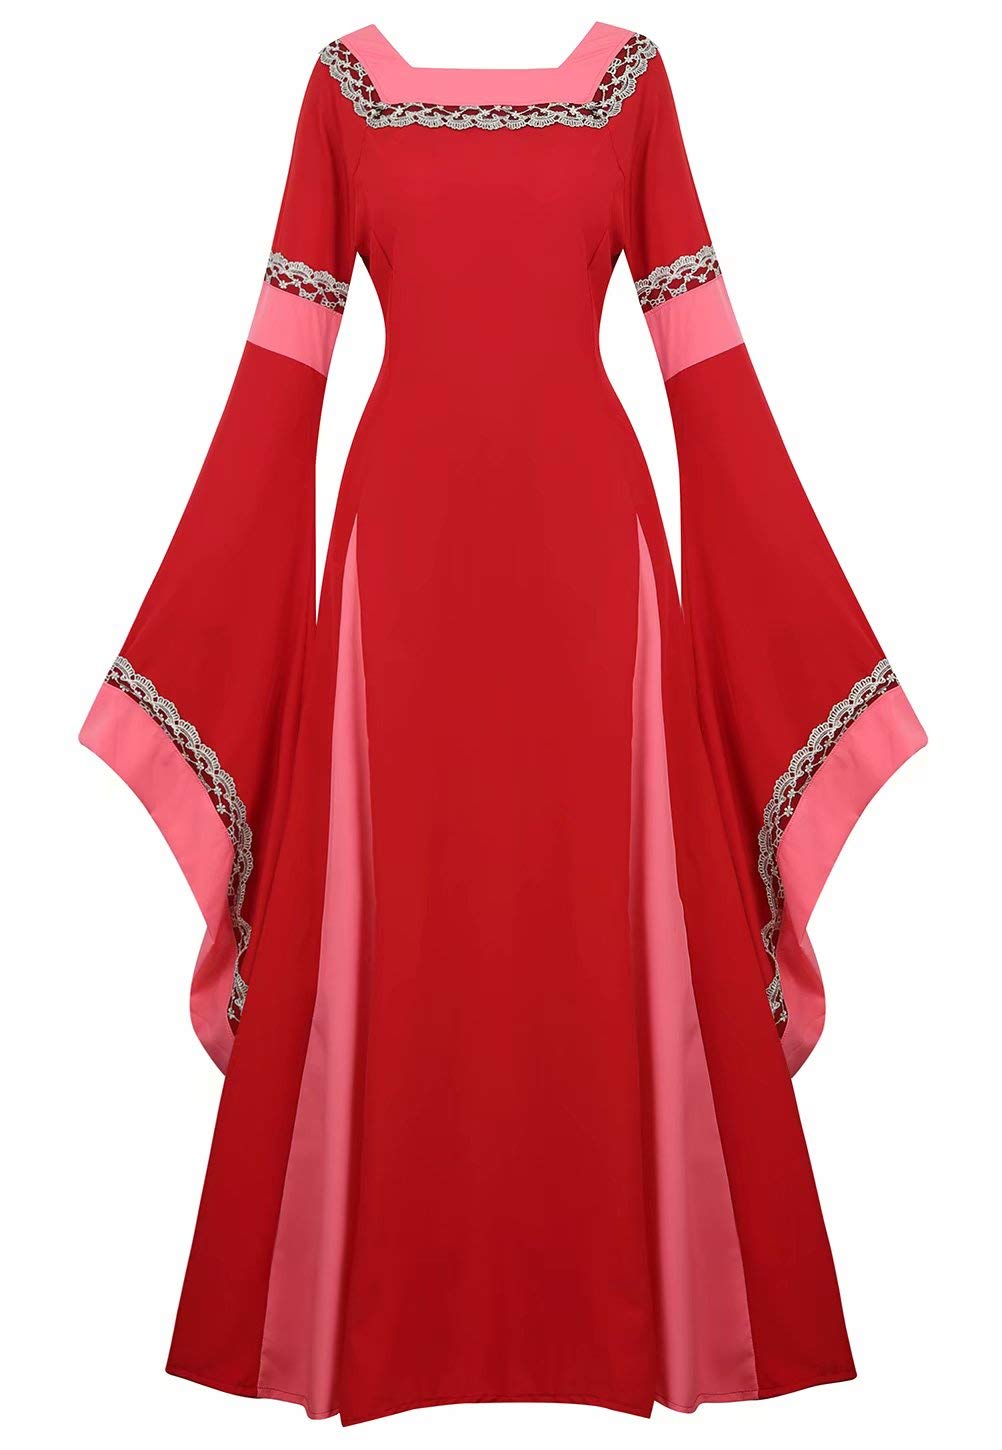 Josamogre Mittelalter Kleidung Damen Kleid mit Trompetenärmel Party Kostüm bodenlang Vintage Retro Renaissance Costume Cosplay Rot L